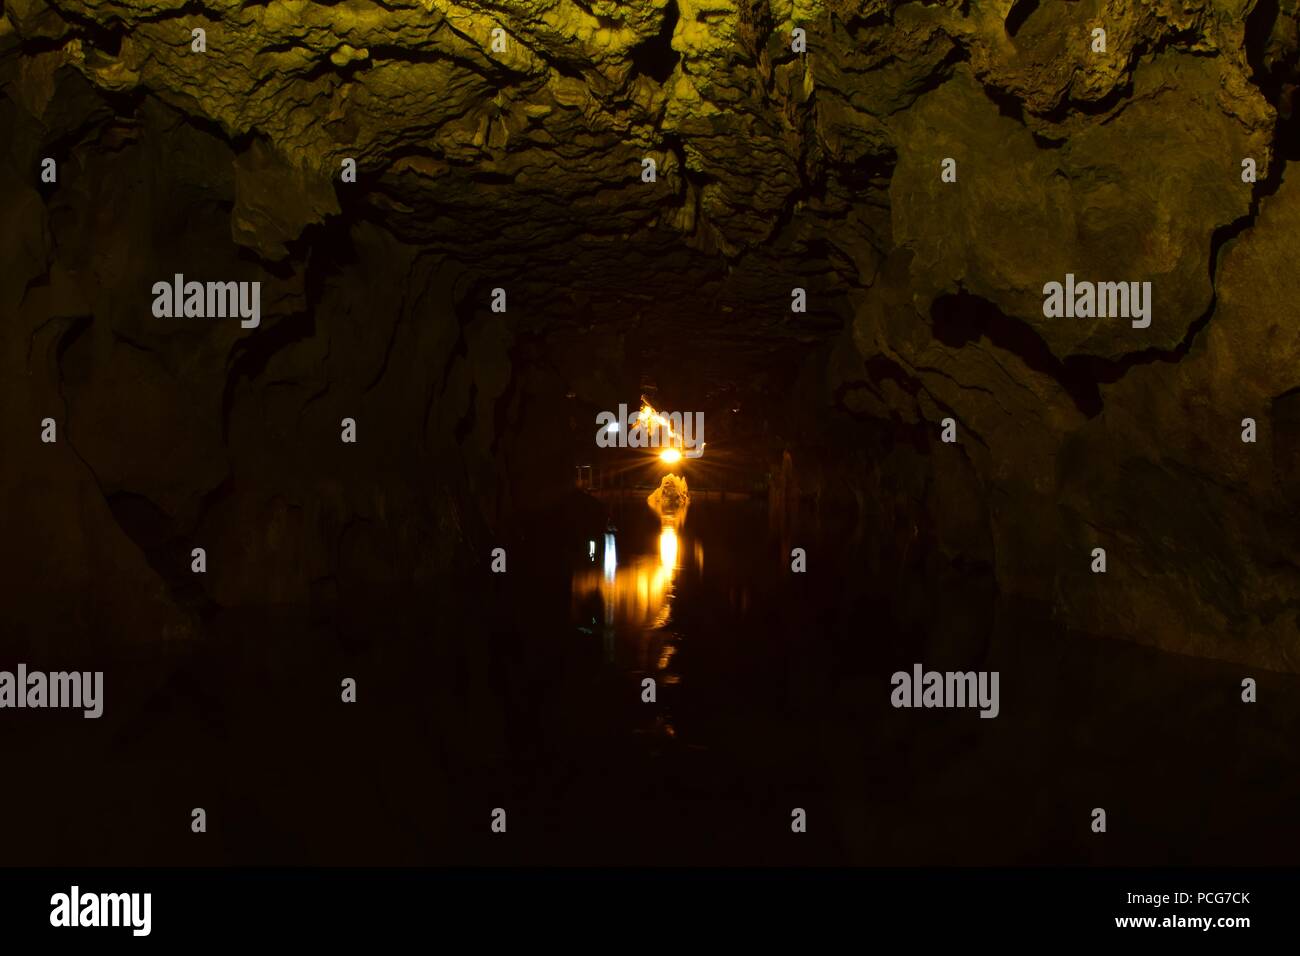 Alisadr water cave in Iran Stock Photo